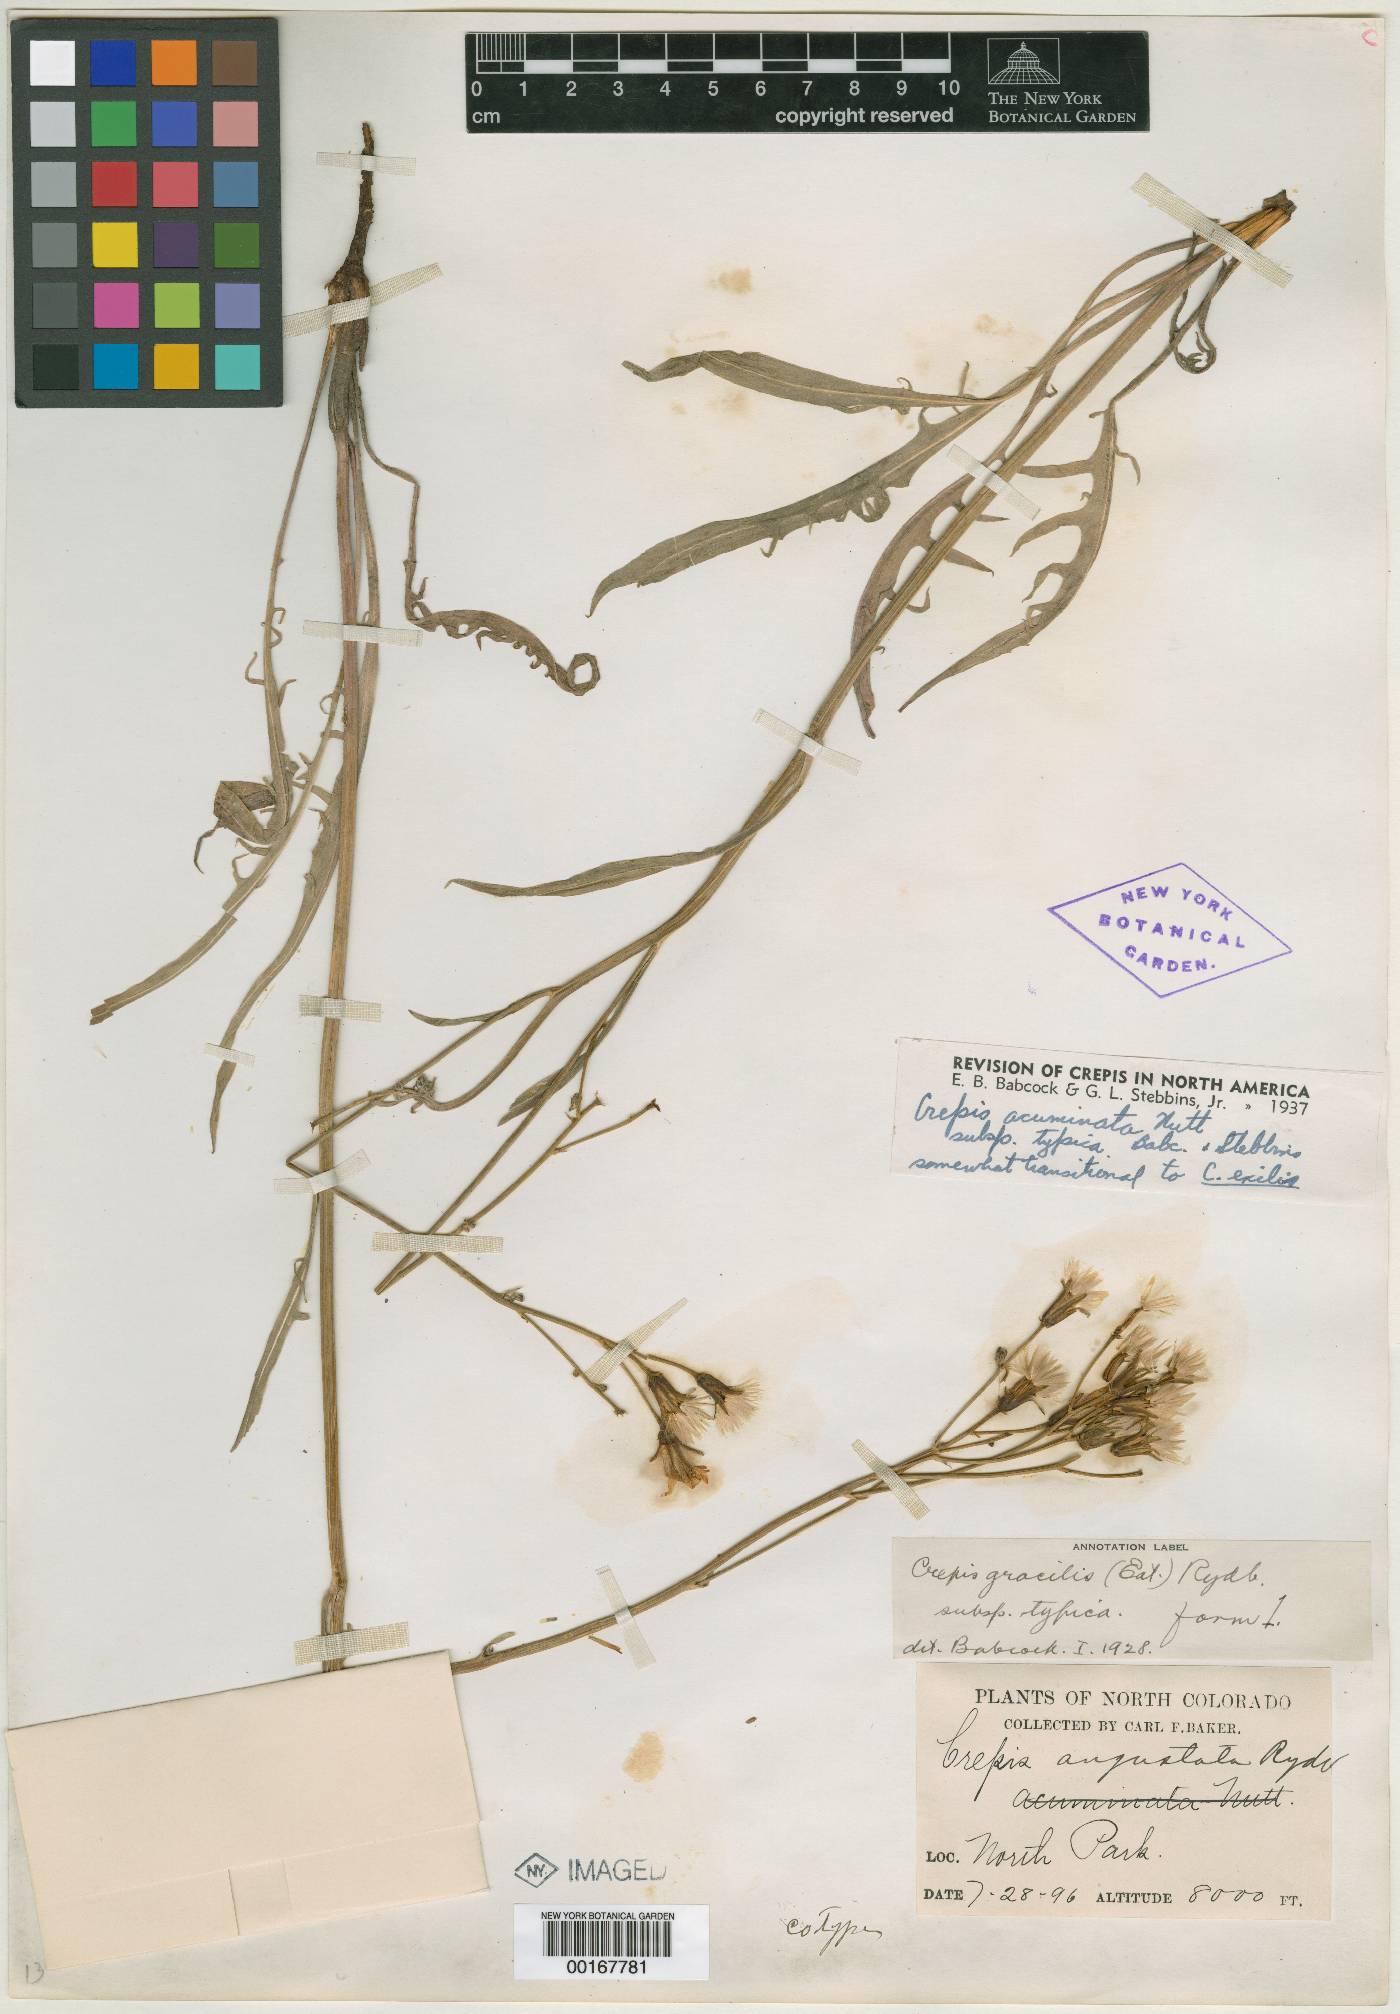 Crepis angustata image